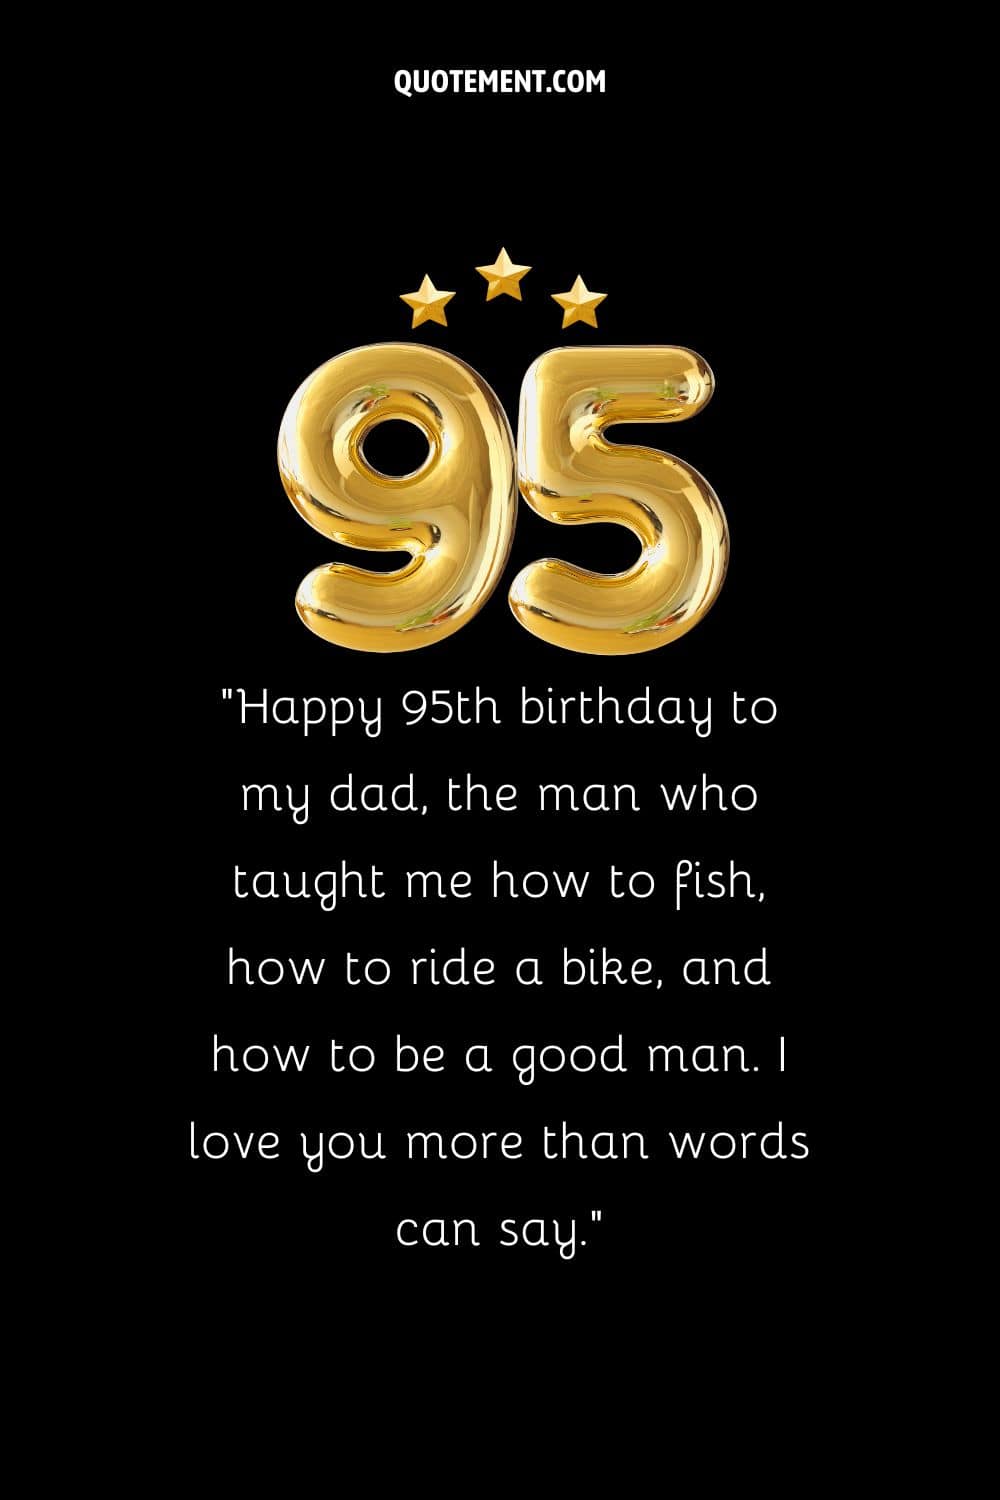 "Feliz 95 cumpleaños a mi padre, el hombre que me enseñó a pescar, a montar en bicicleta y a ser un buen hombre".